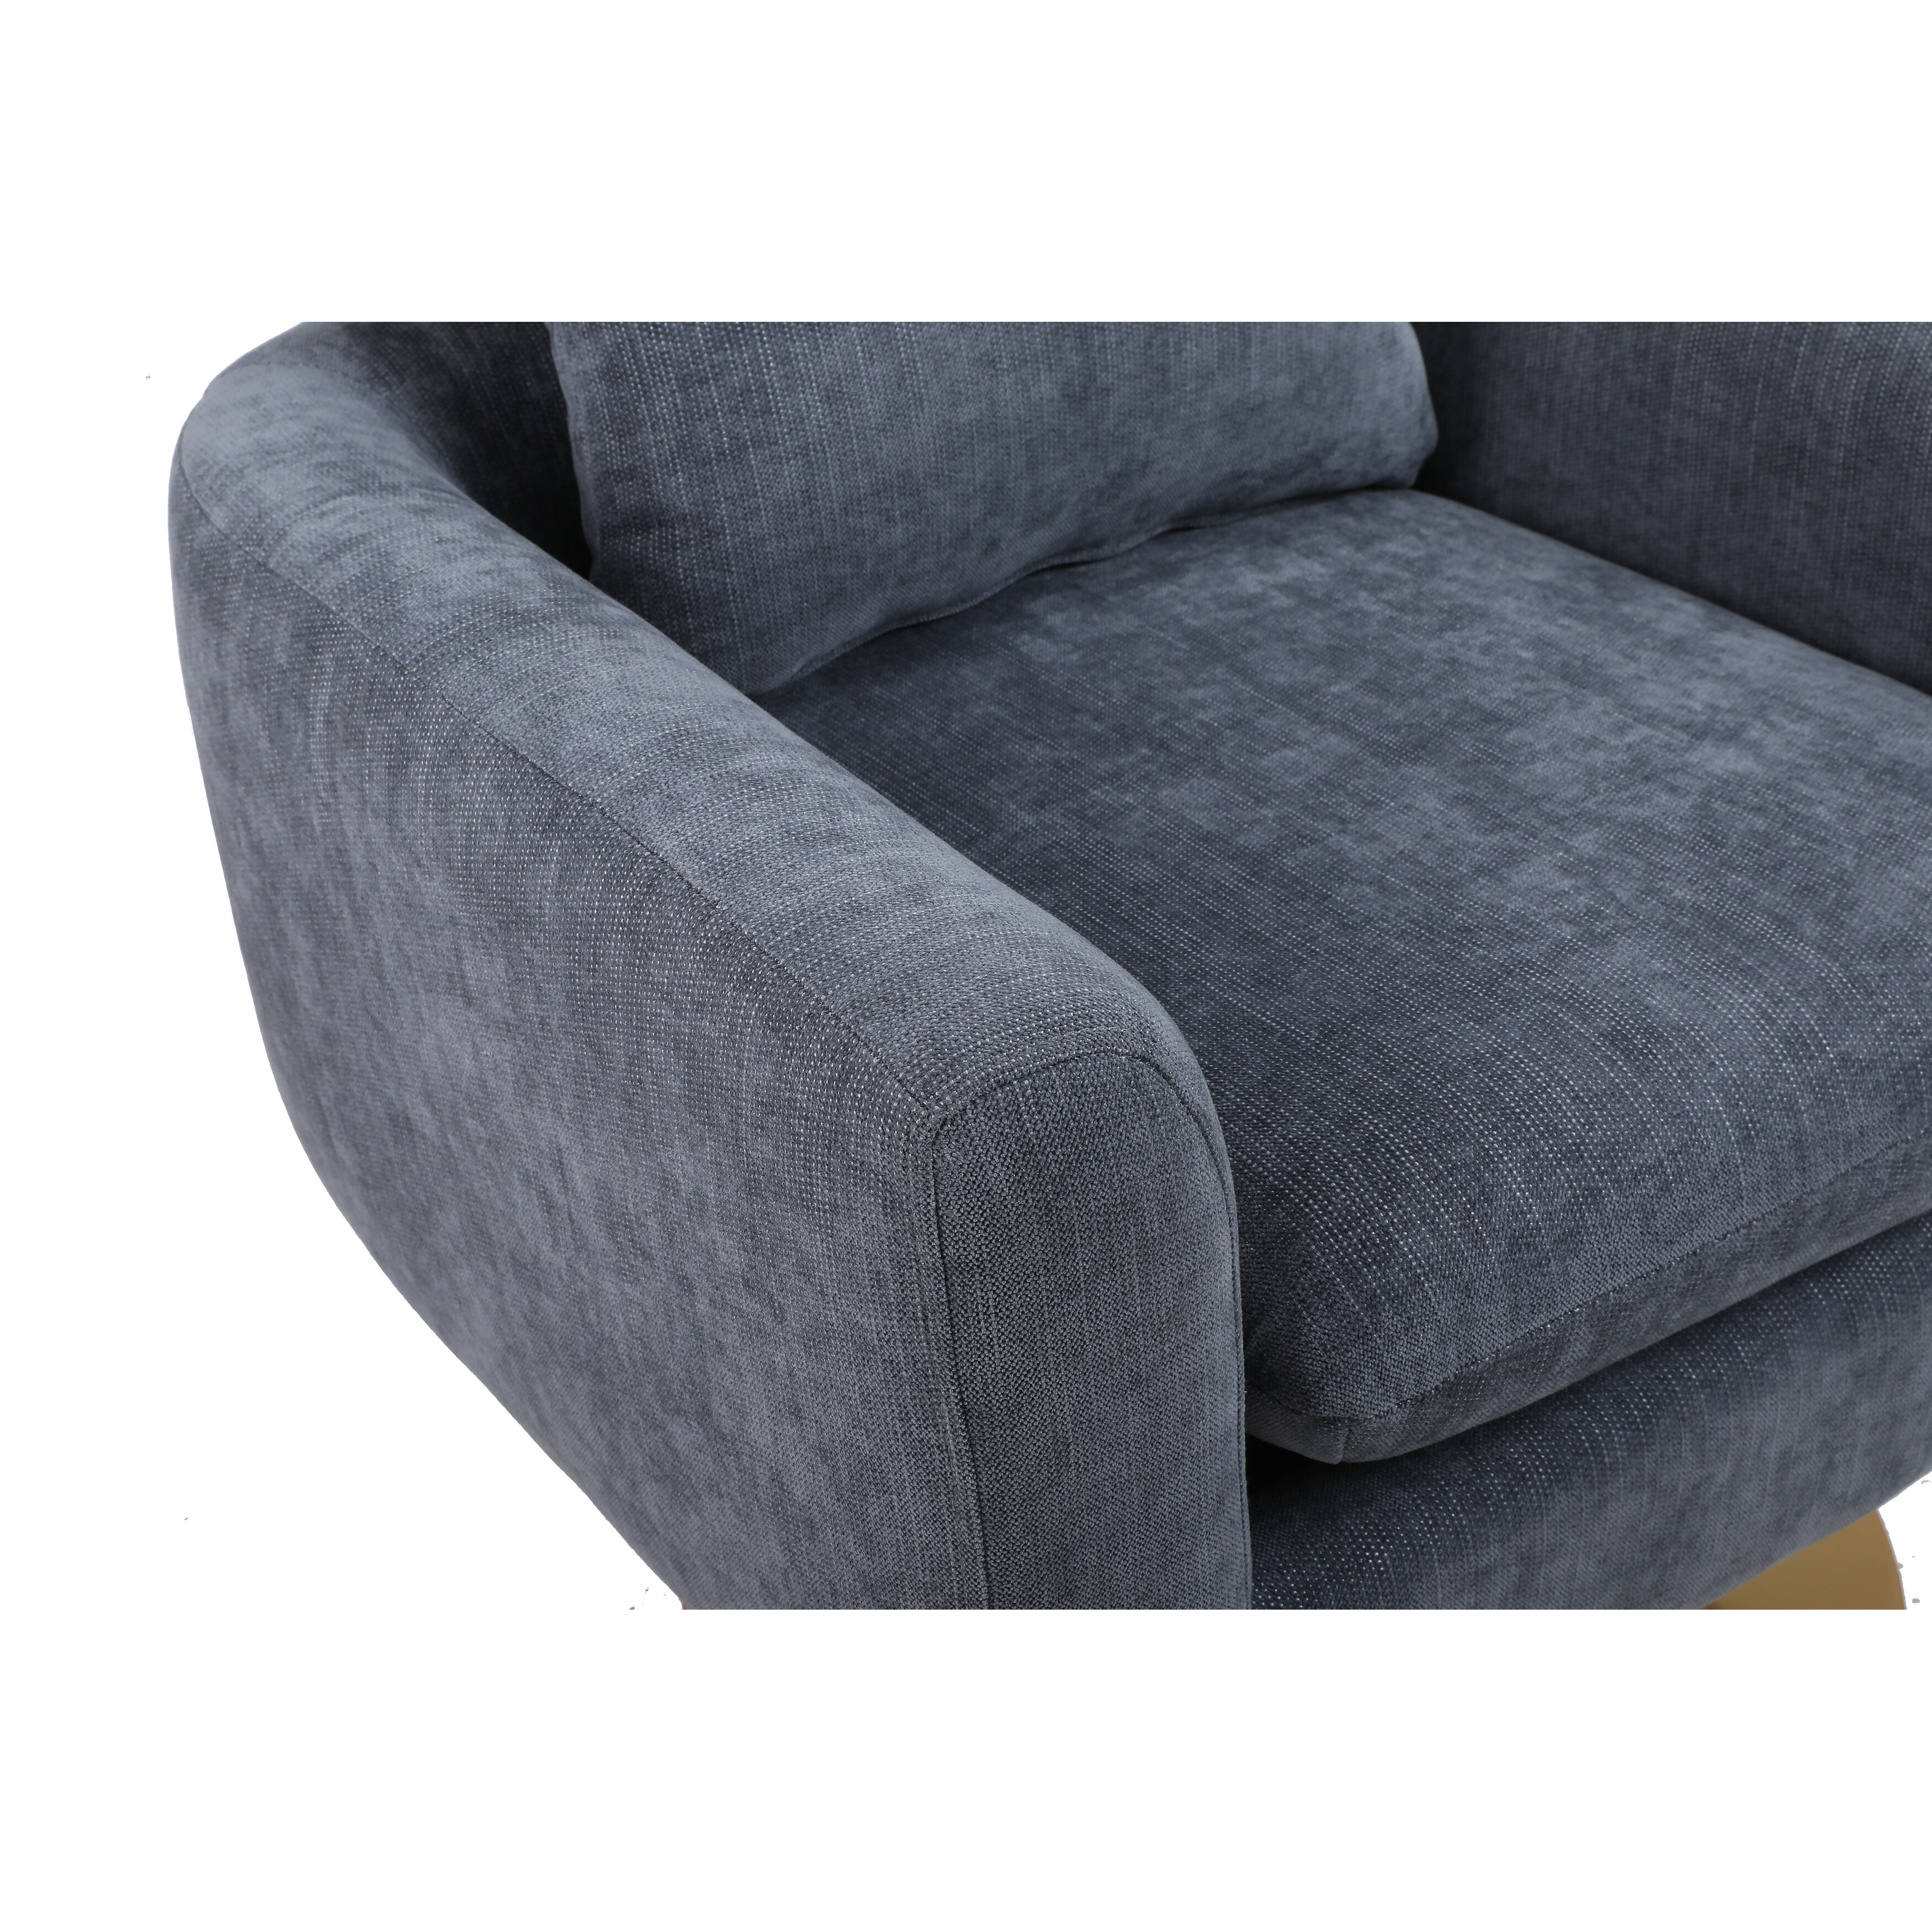 360-degree Swivel Linen Accent Chair